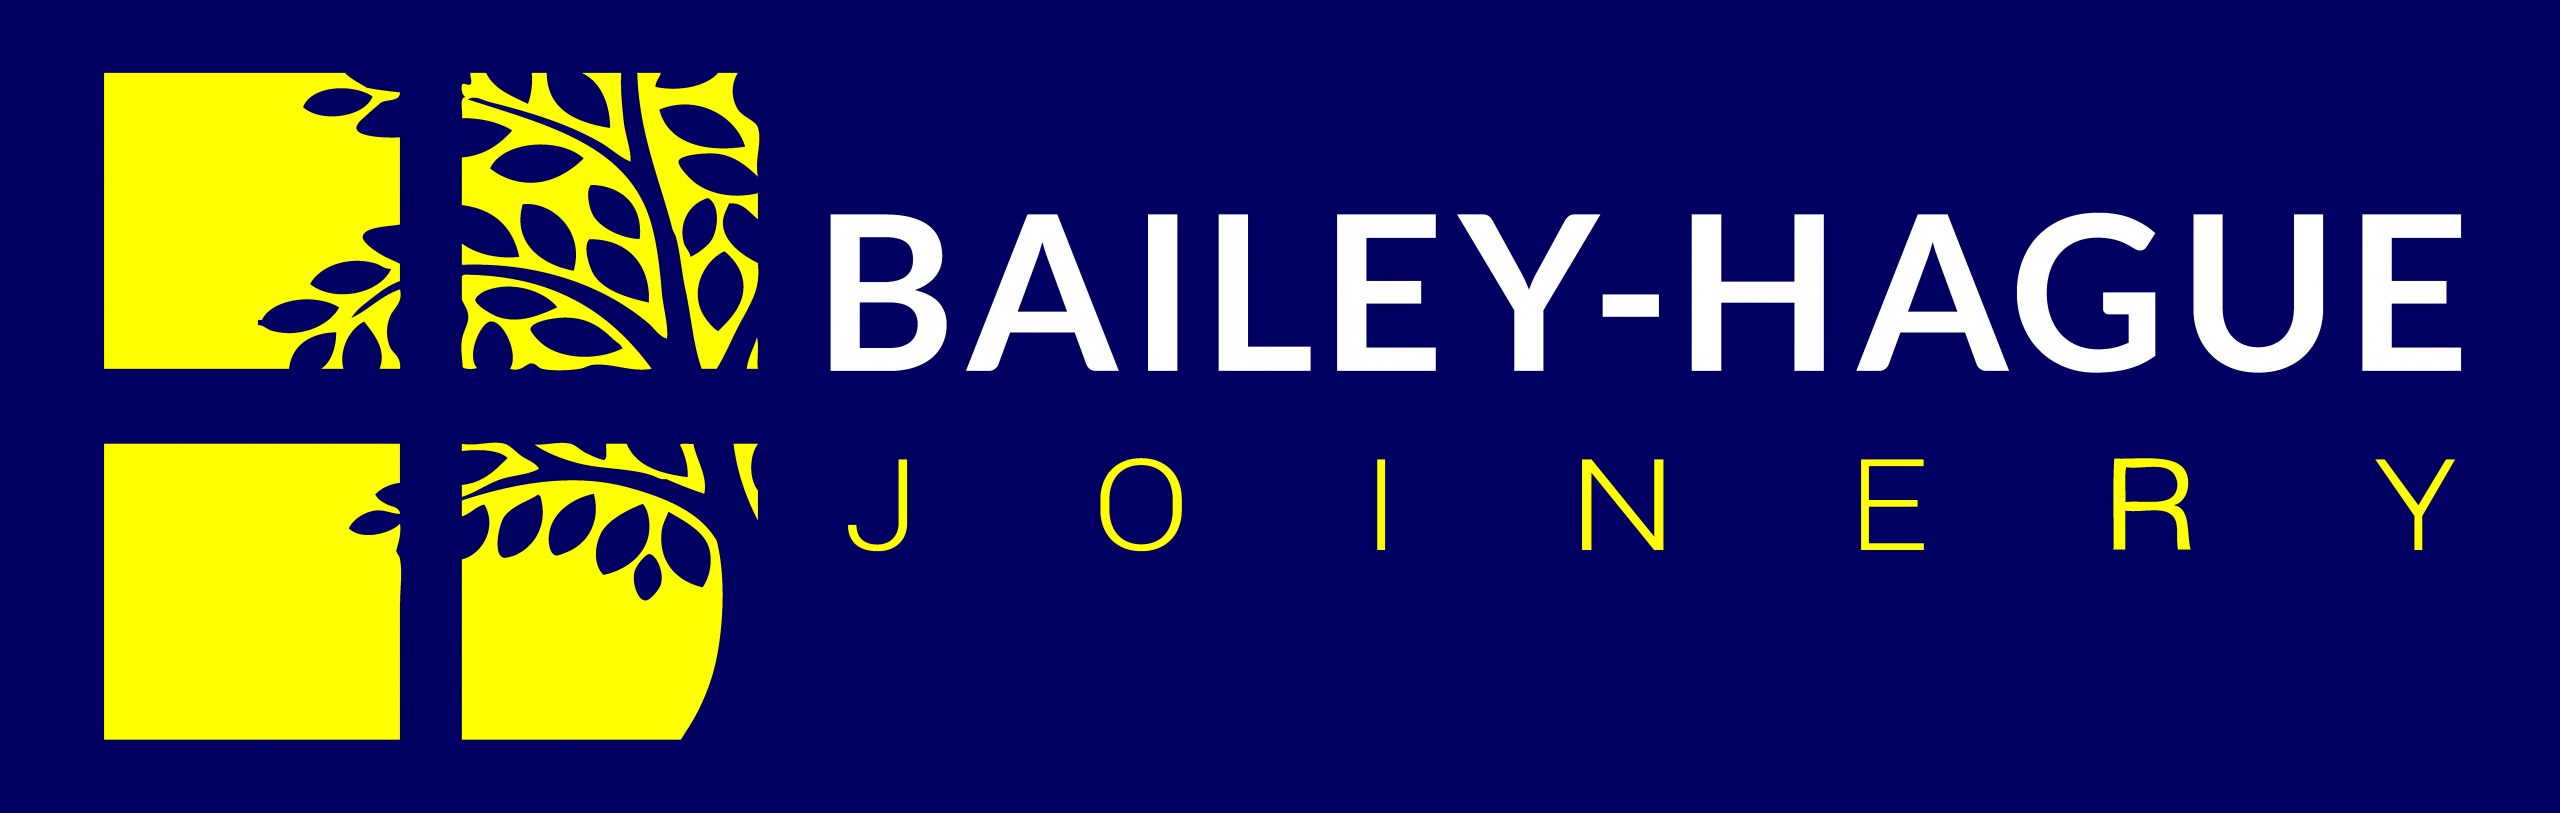 Bailey Hague joinery Ltd logo